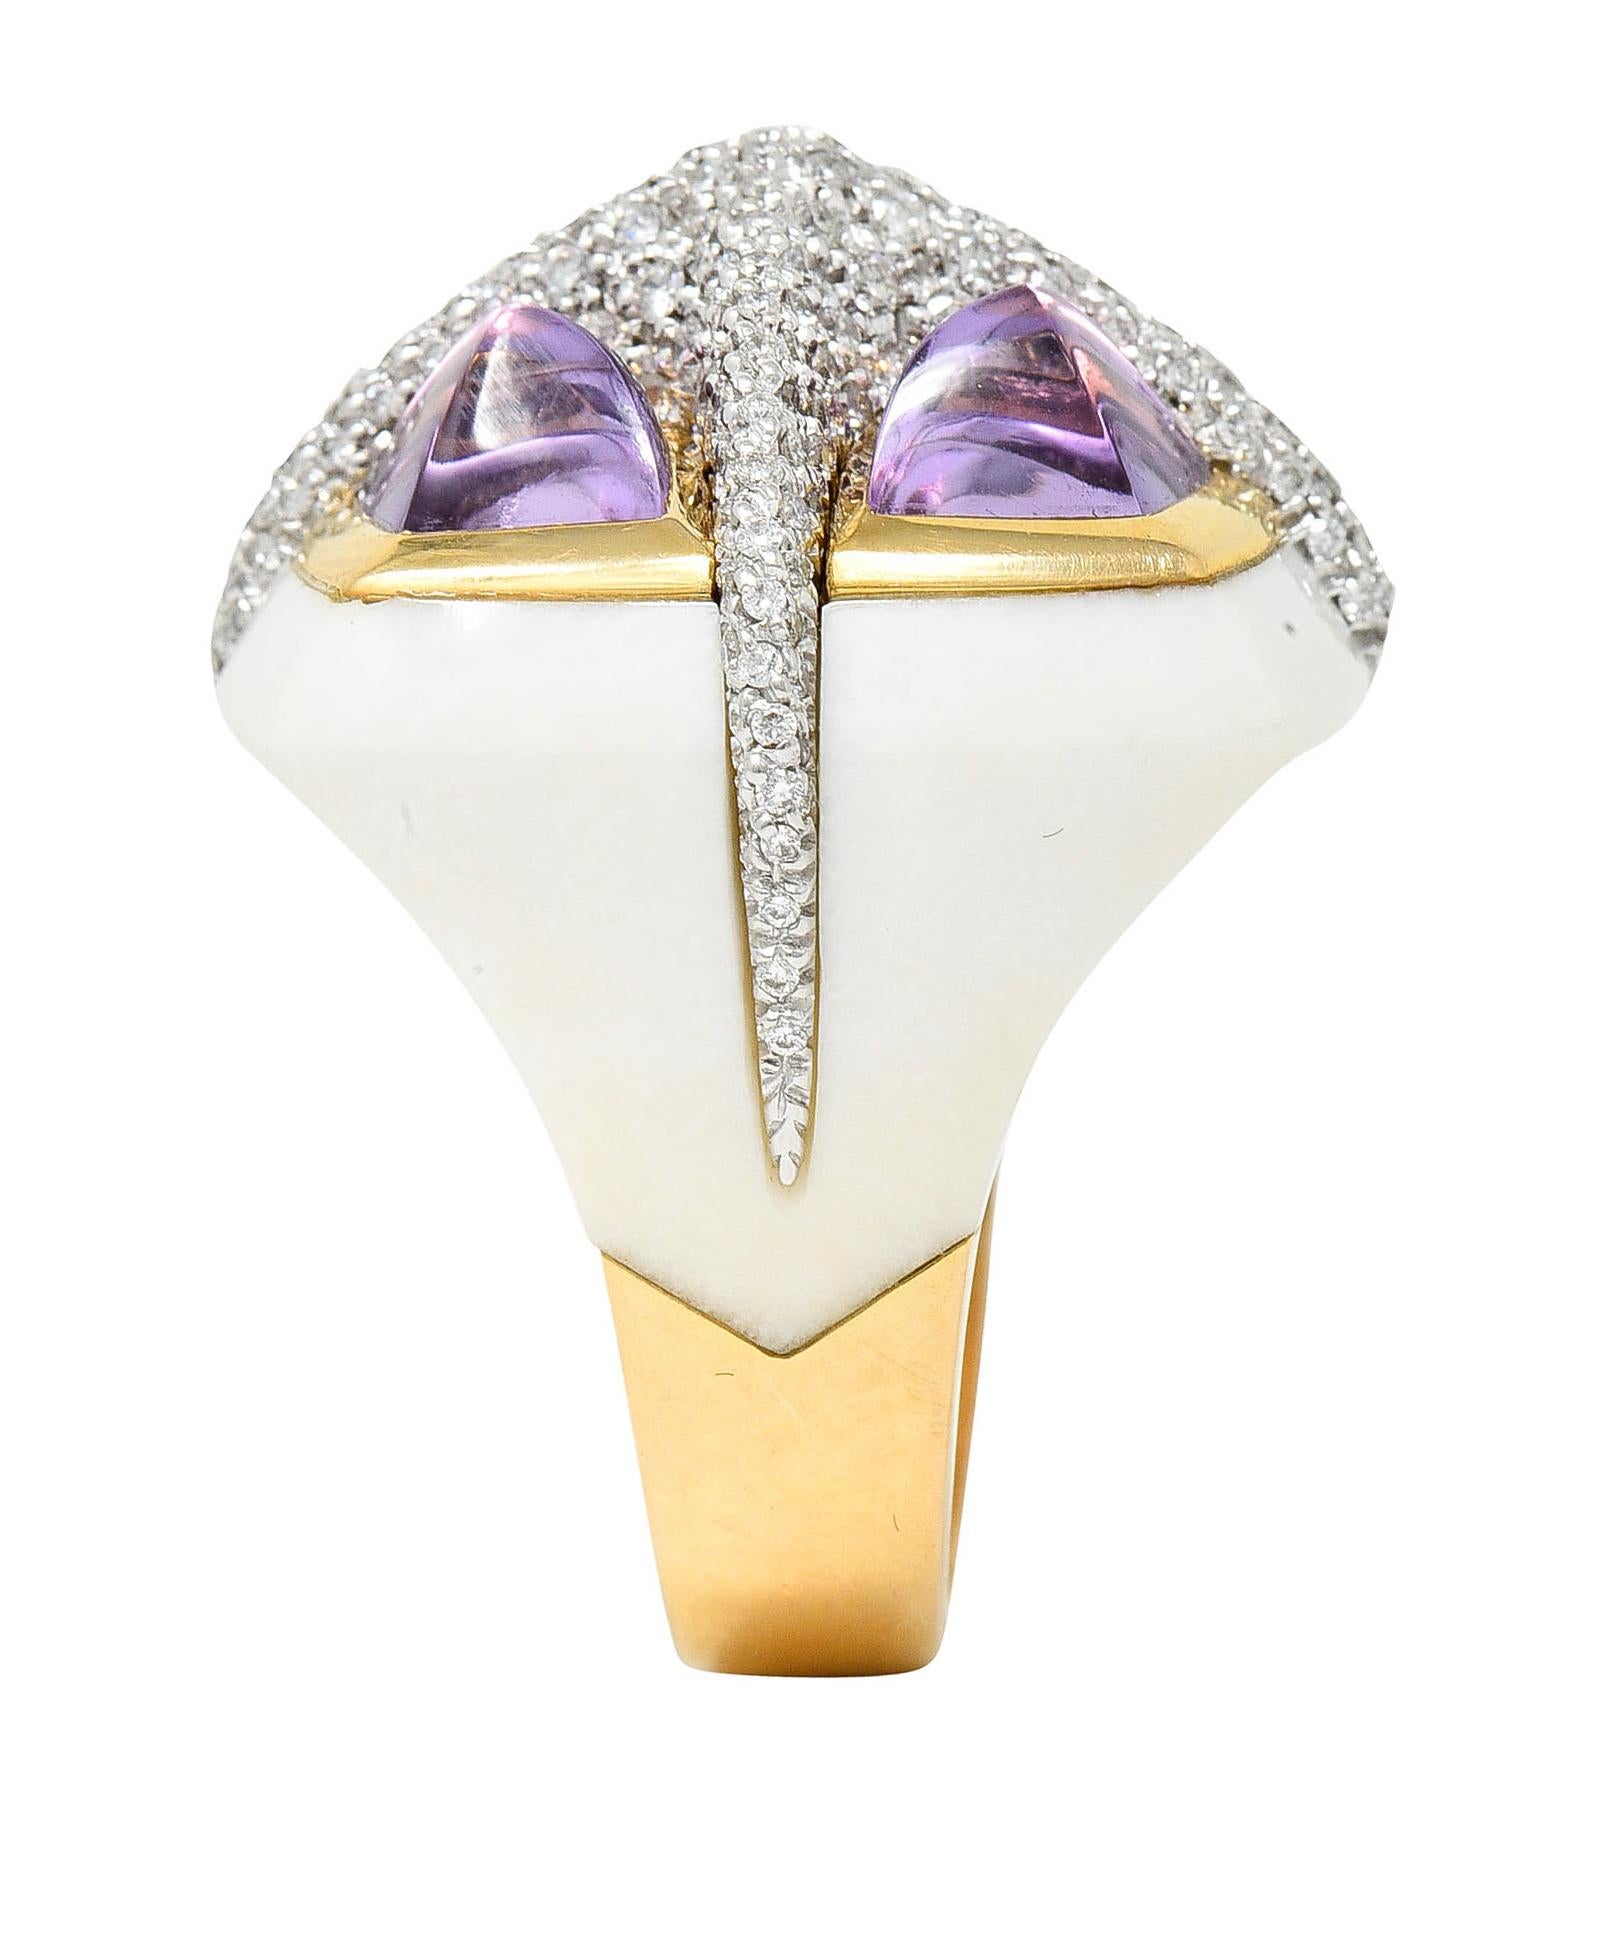 Valente Milano Diamond Amethyst Agate 18 Karat Gold Statement Ring 4